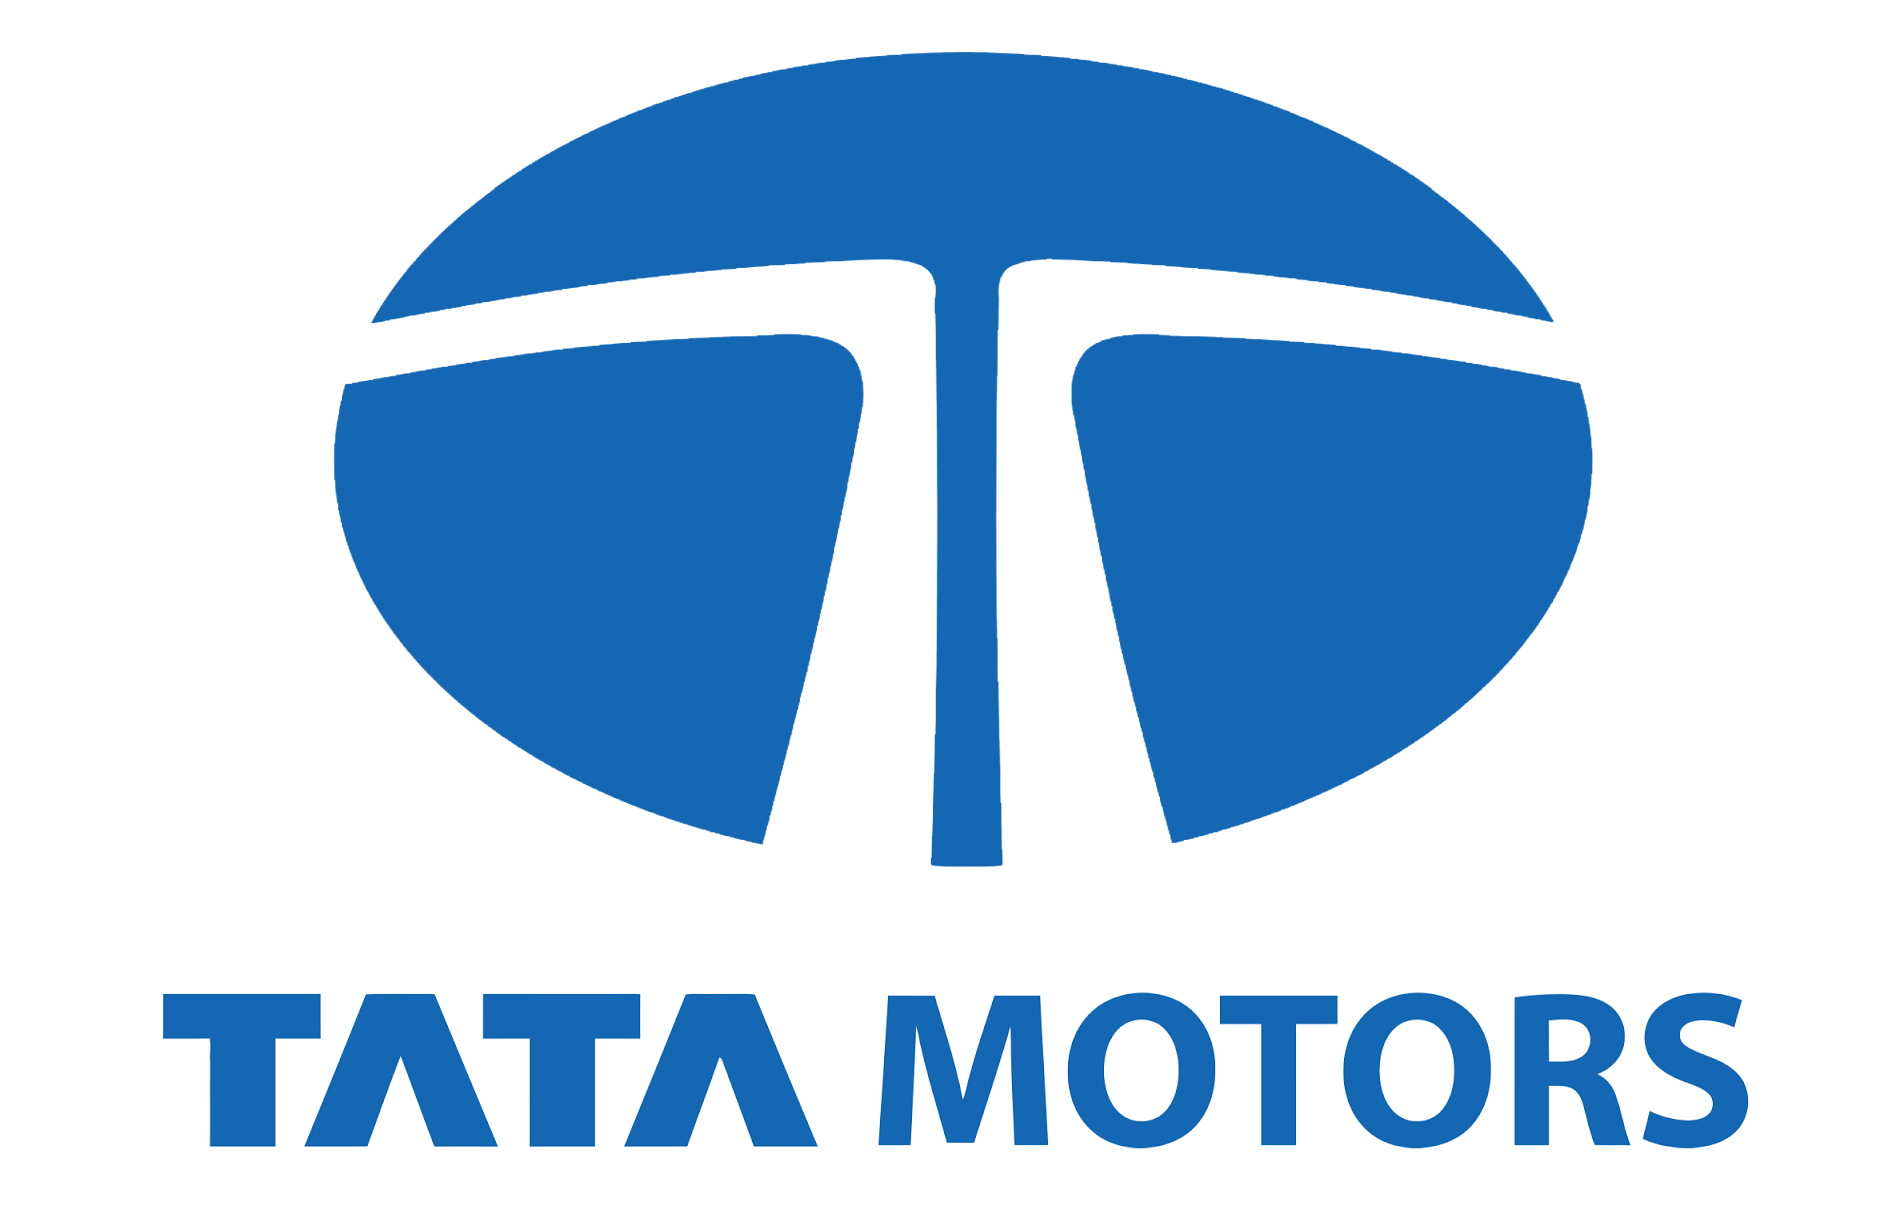 Tata Motors Cars Showroom - Jaika Motors|Show Room|Automotive